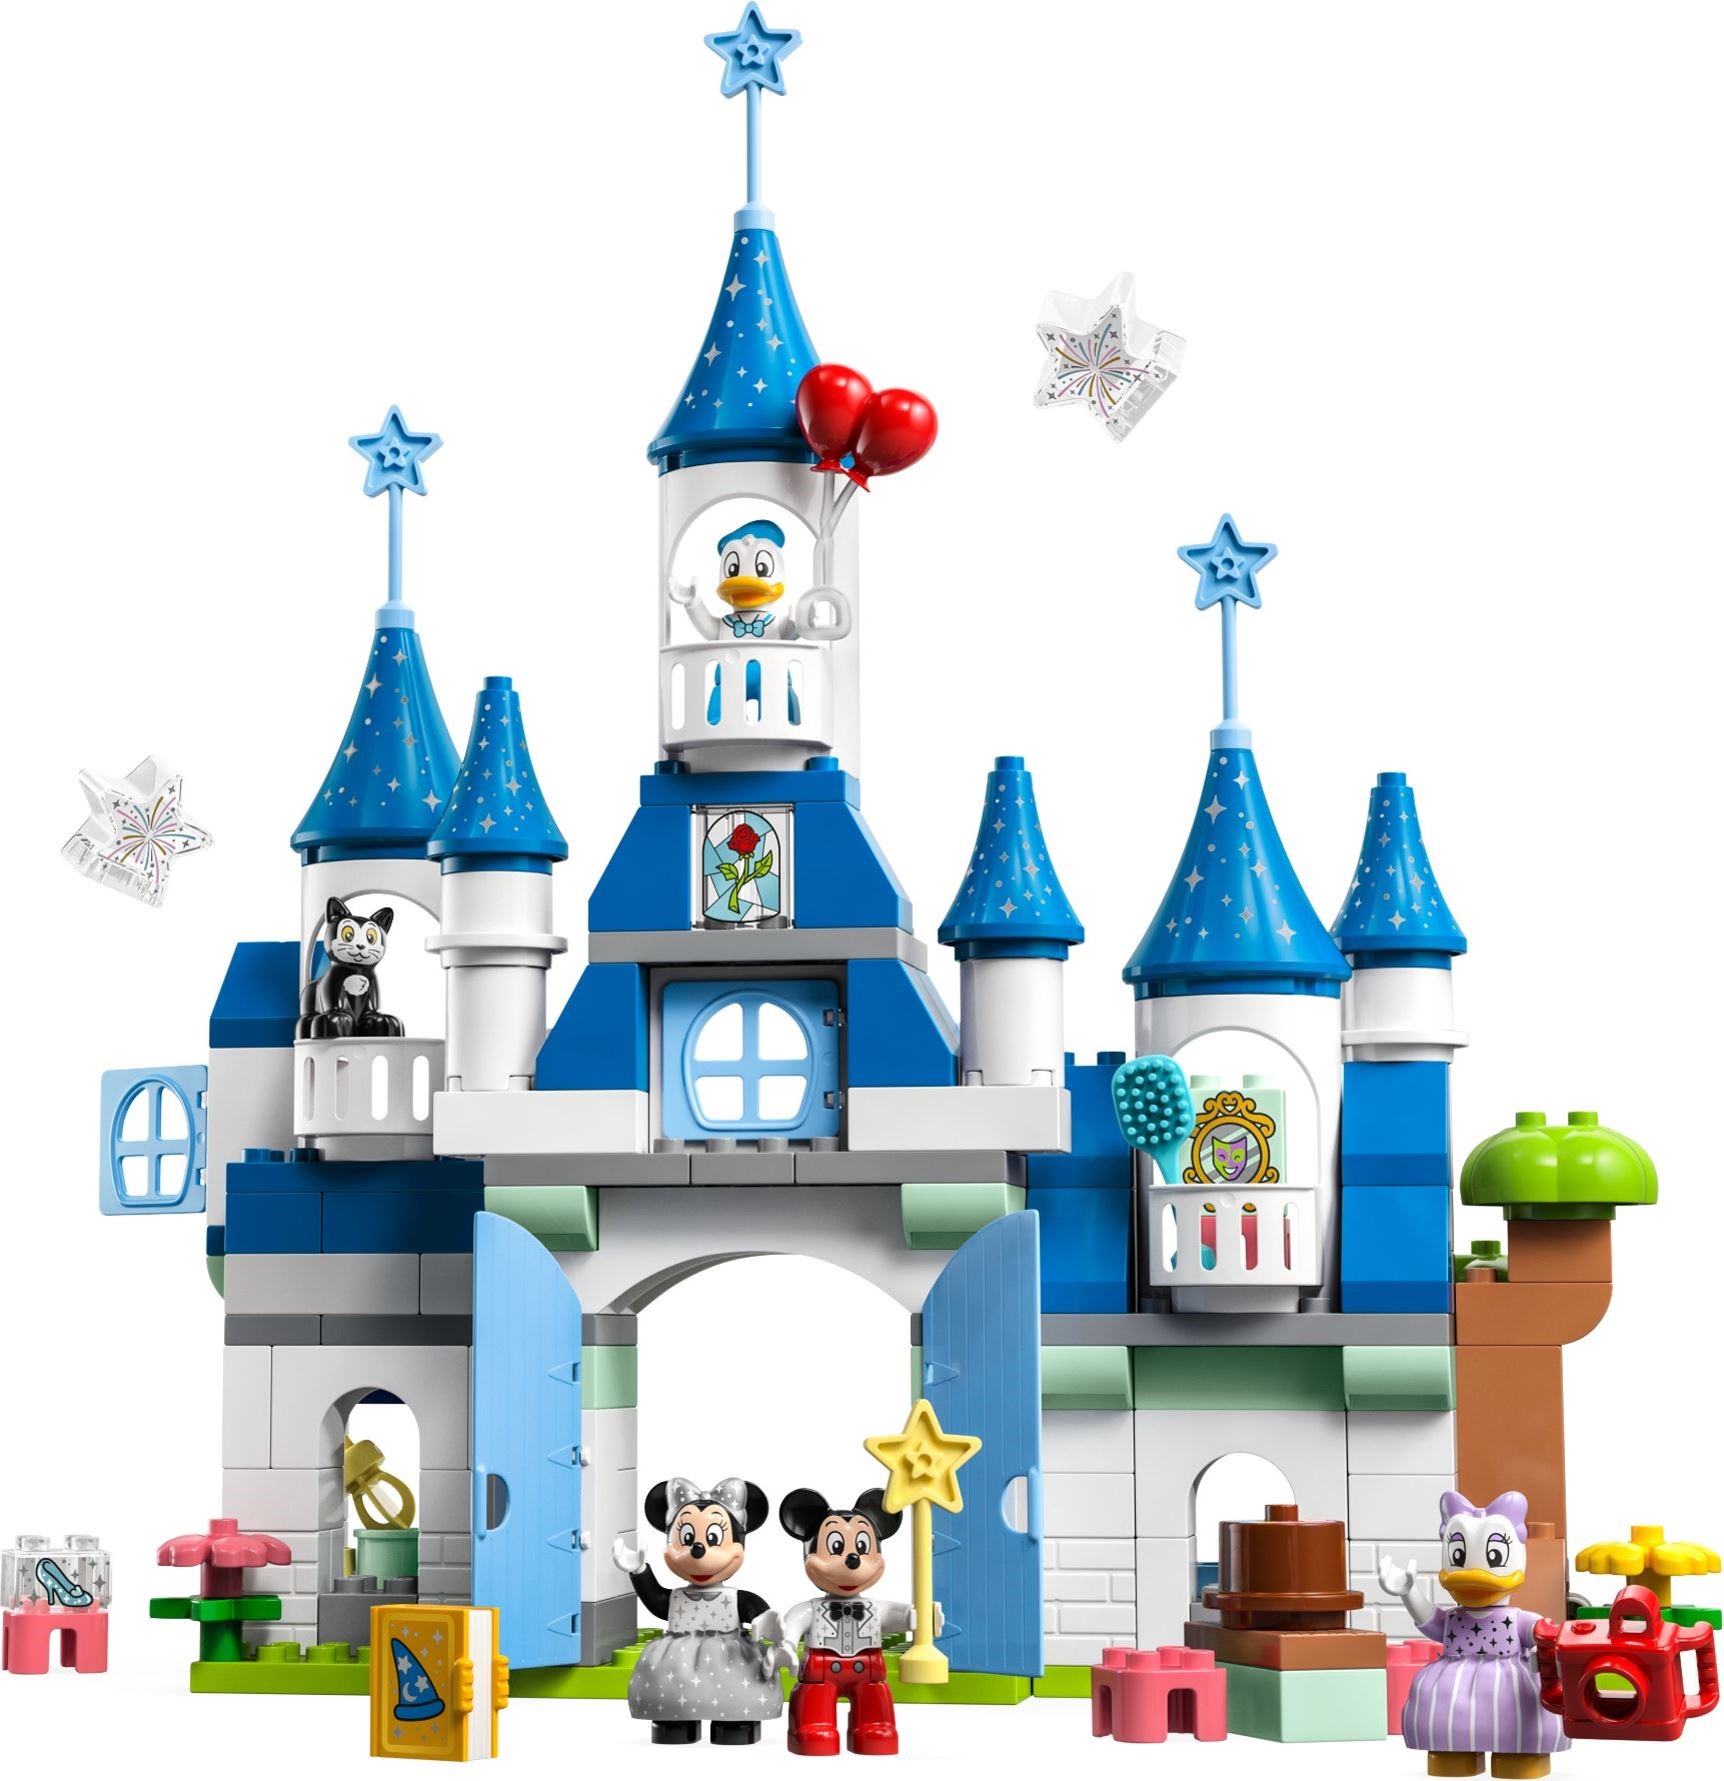 LEGO Disney 100